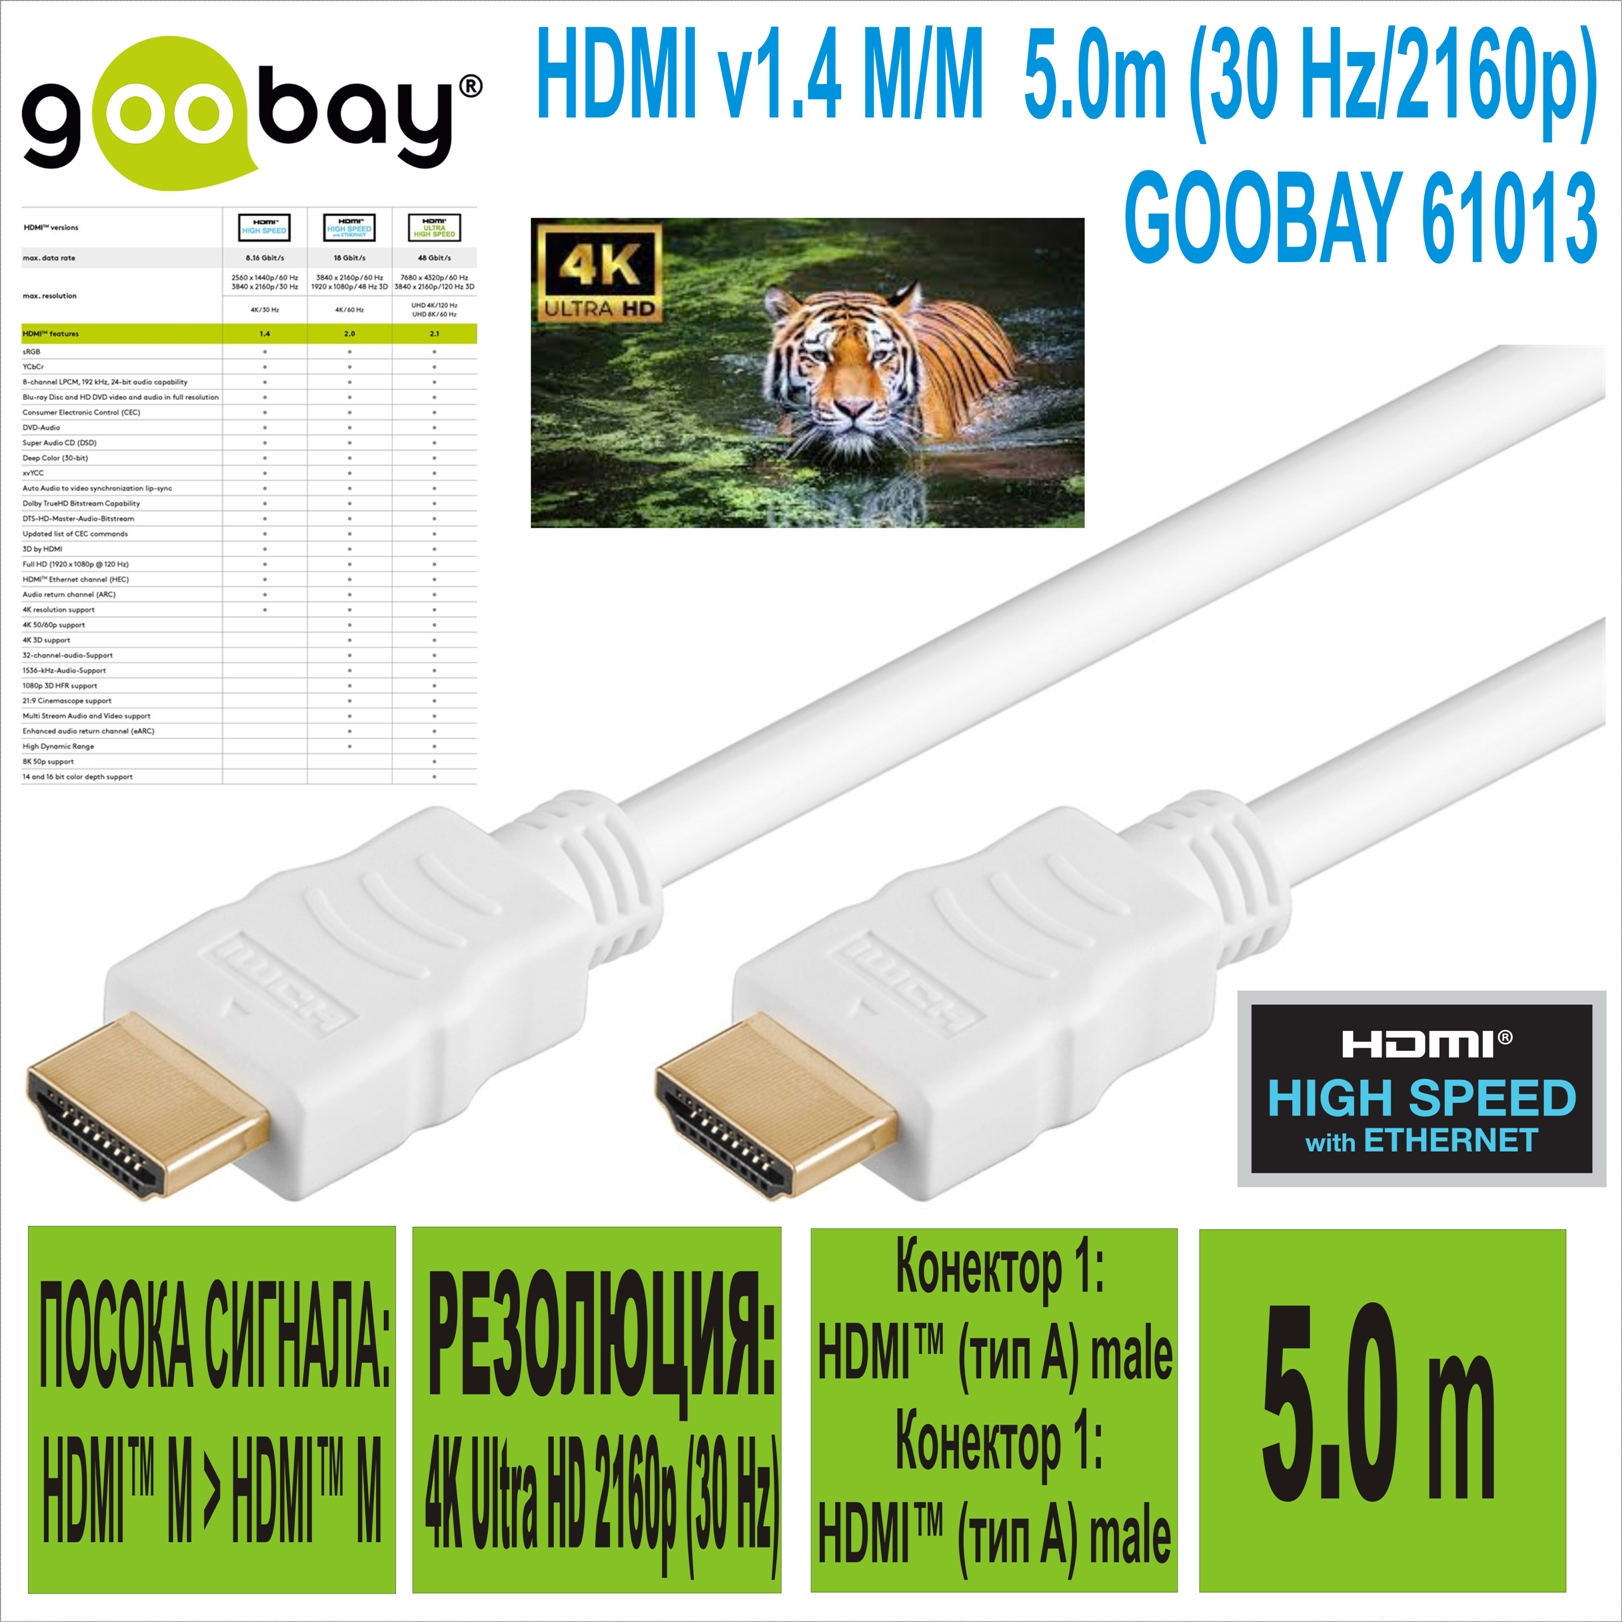 HDMI v1.4 M/M  5.0m (30 Hz/2160p) GOOBAY 61013